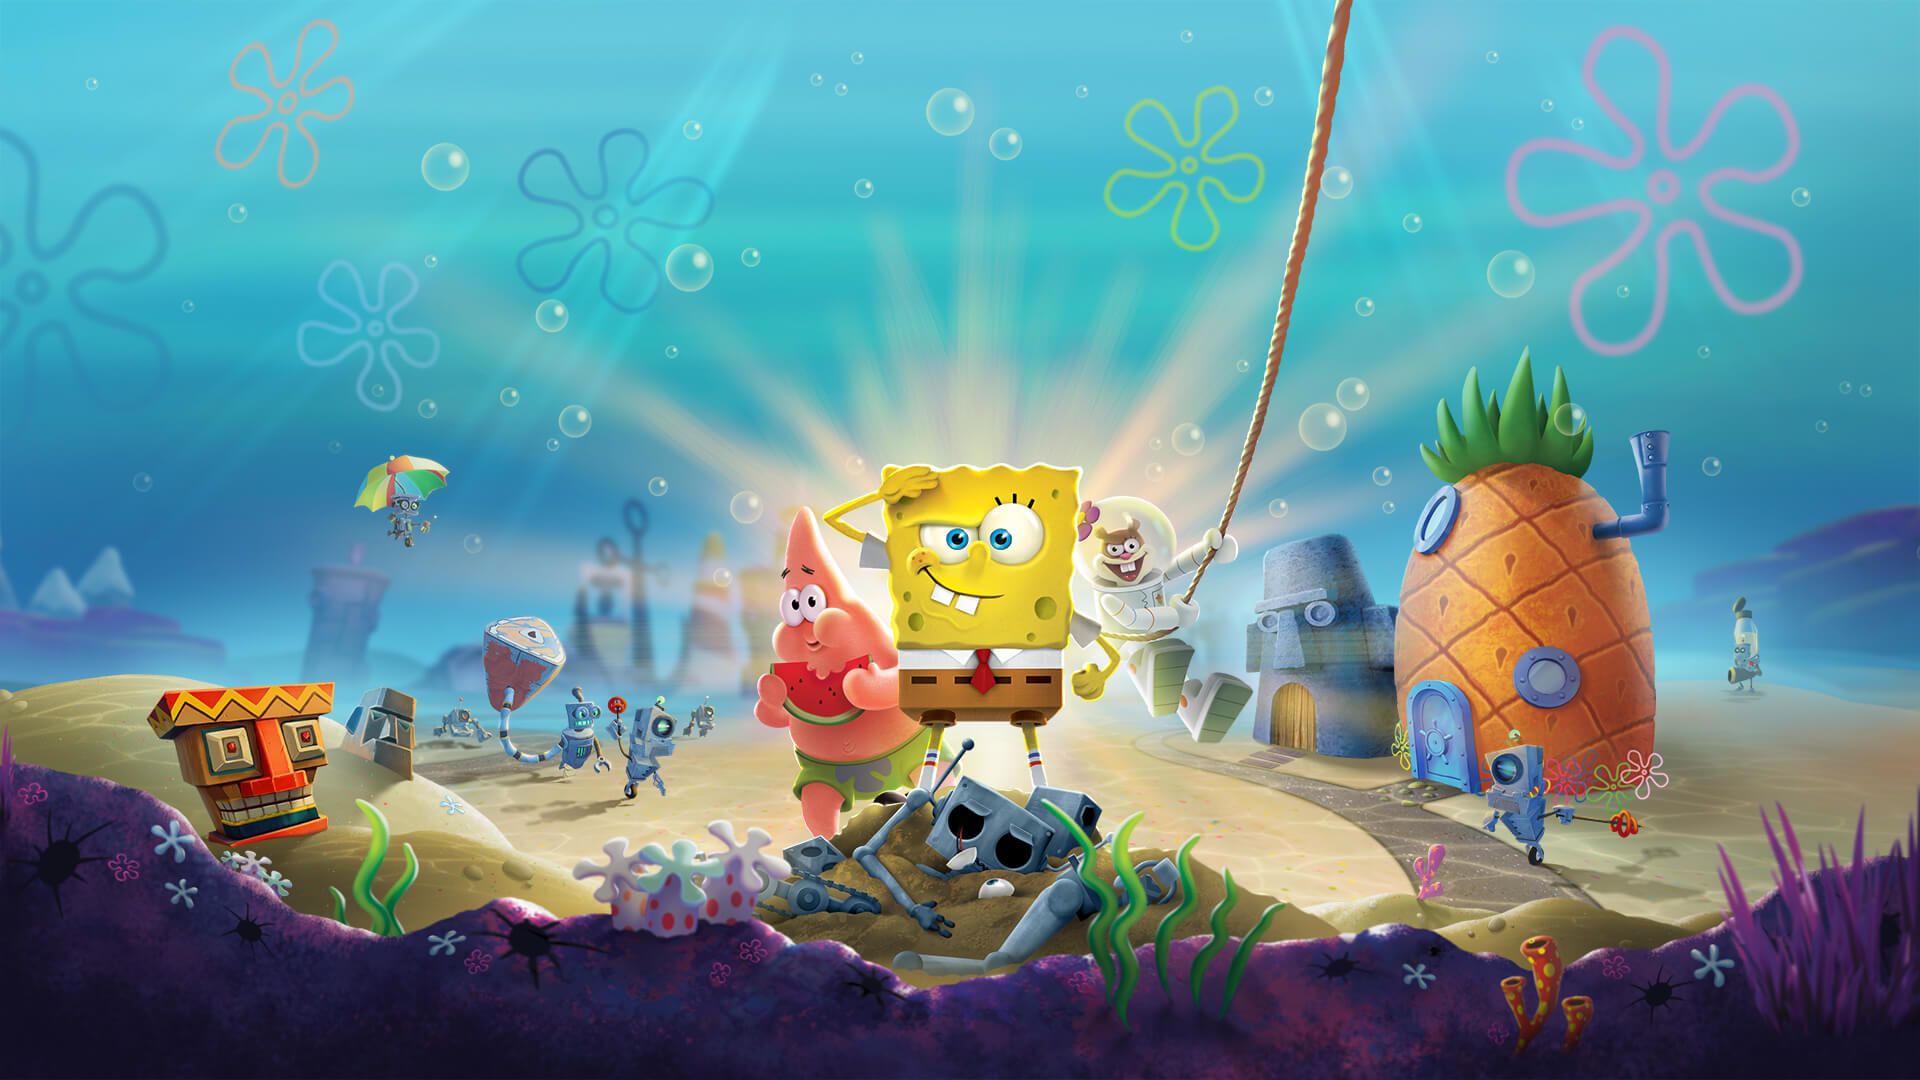 SpongeBob SquarePants Battle for Bikini Bottom Rehydrated 1080P Laptop Full HD Wallpaper, HD Games 4K Wallpaper, Image, Photo and Background